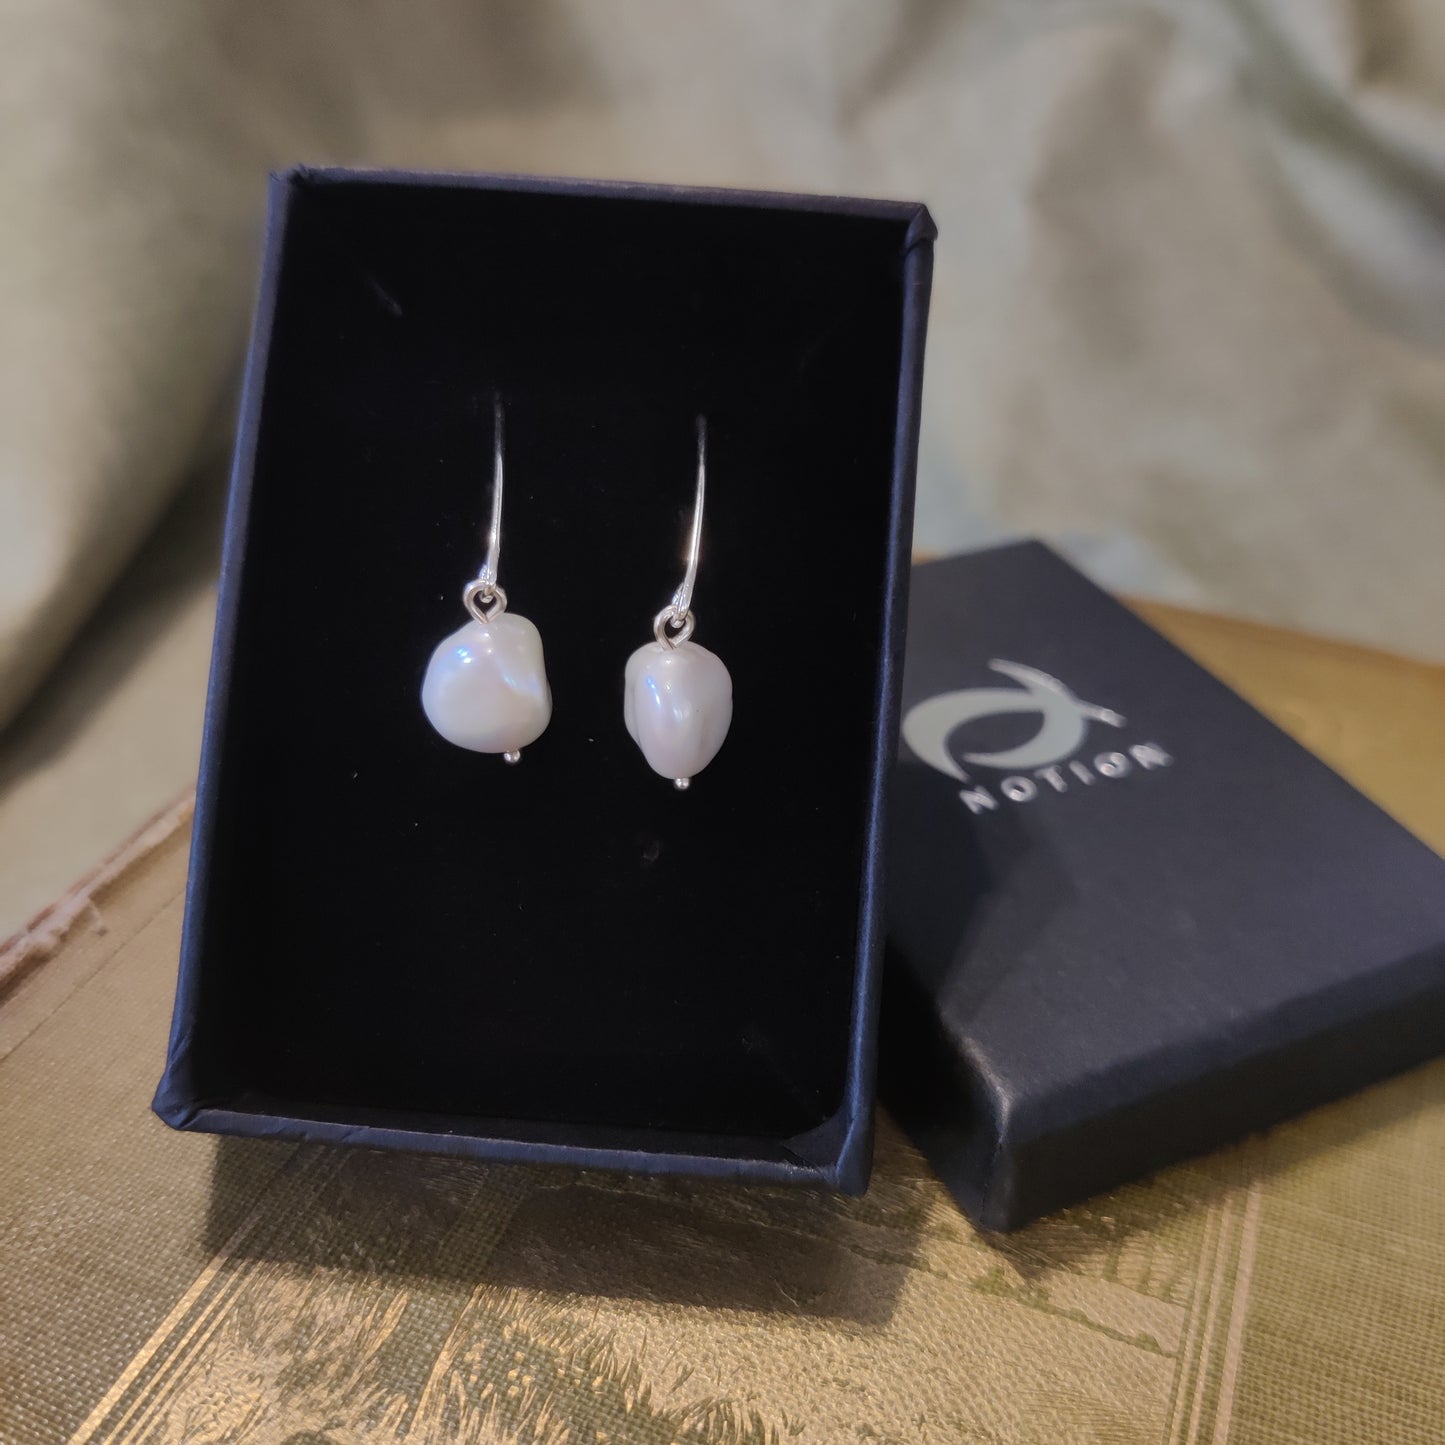 Pearl silver earrings in gift box by Notion Jewellery